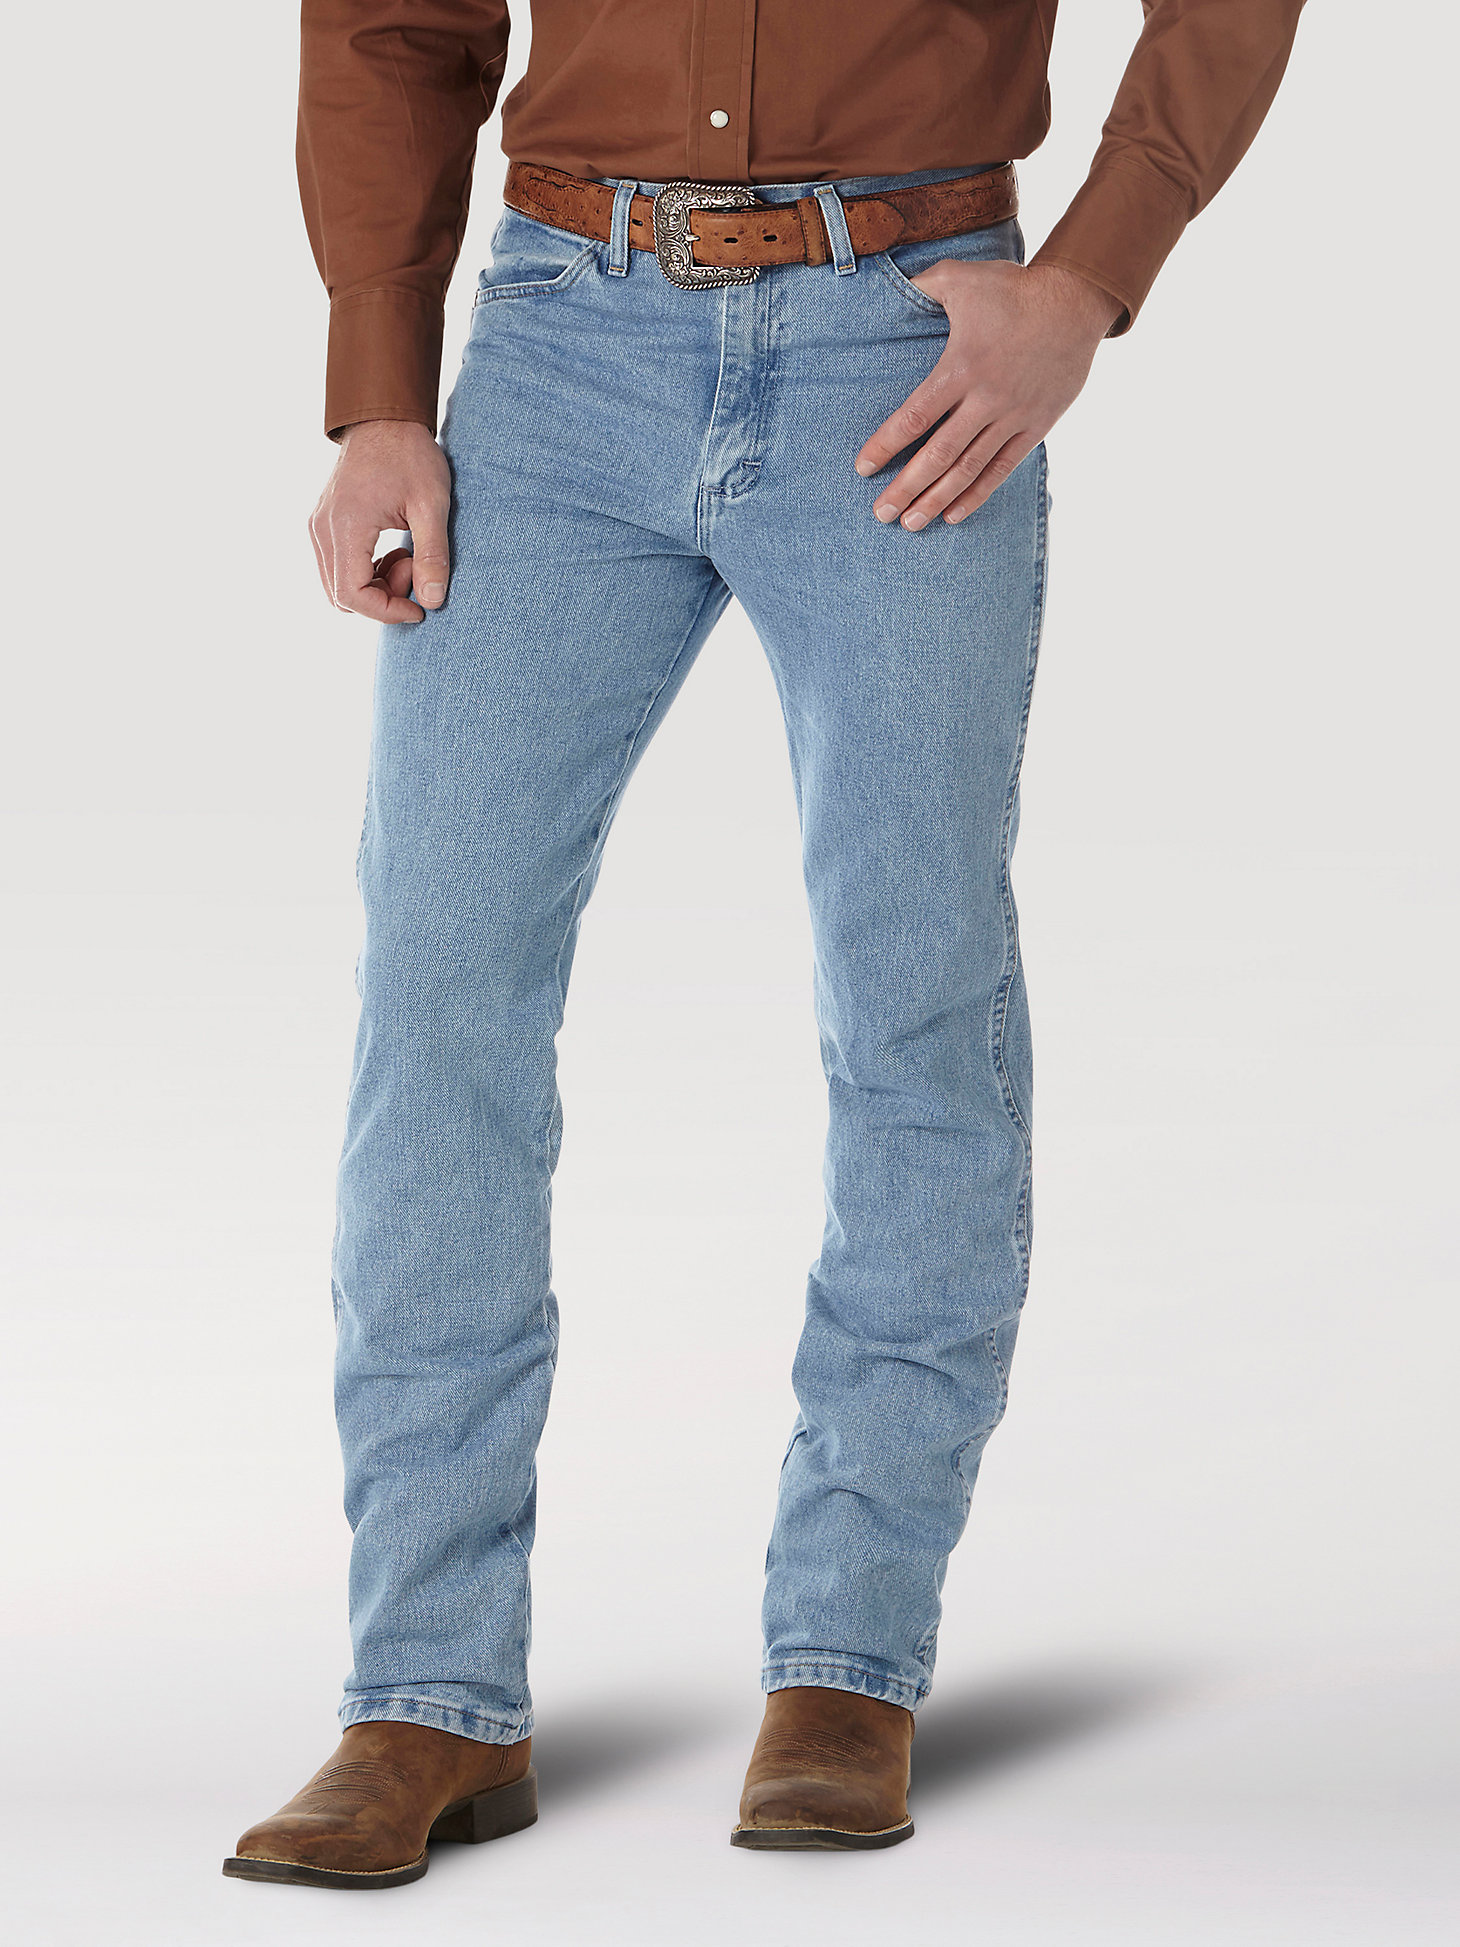 Wrangler® Cowboy Cut® Slim Fit Jean in Antique Wash alternative view 3